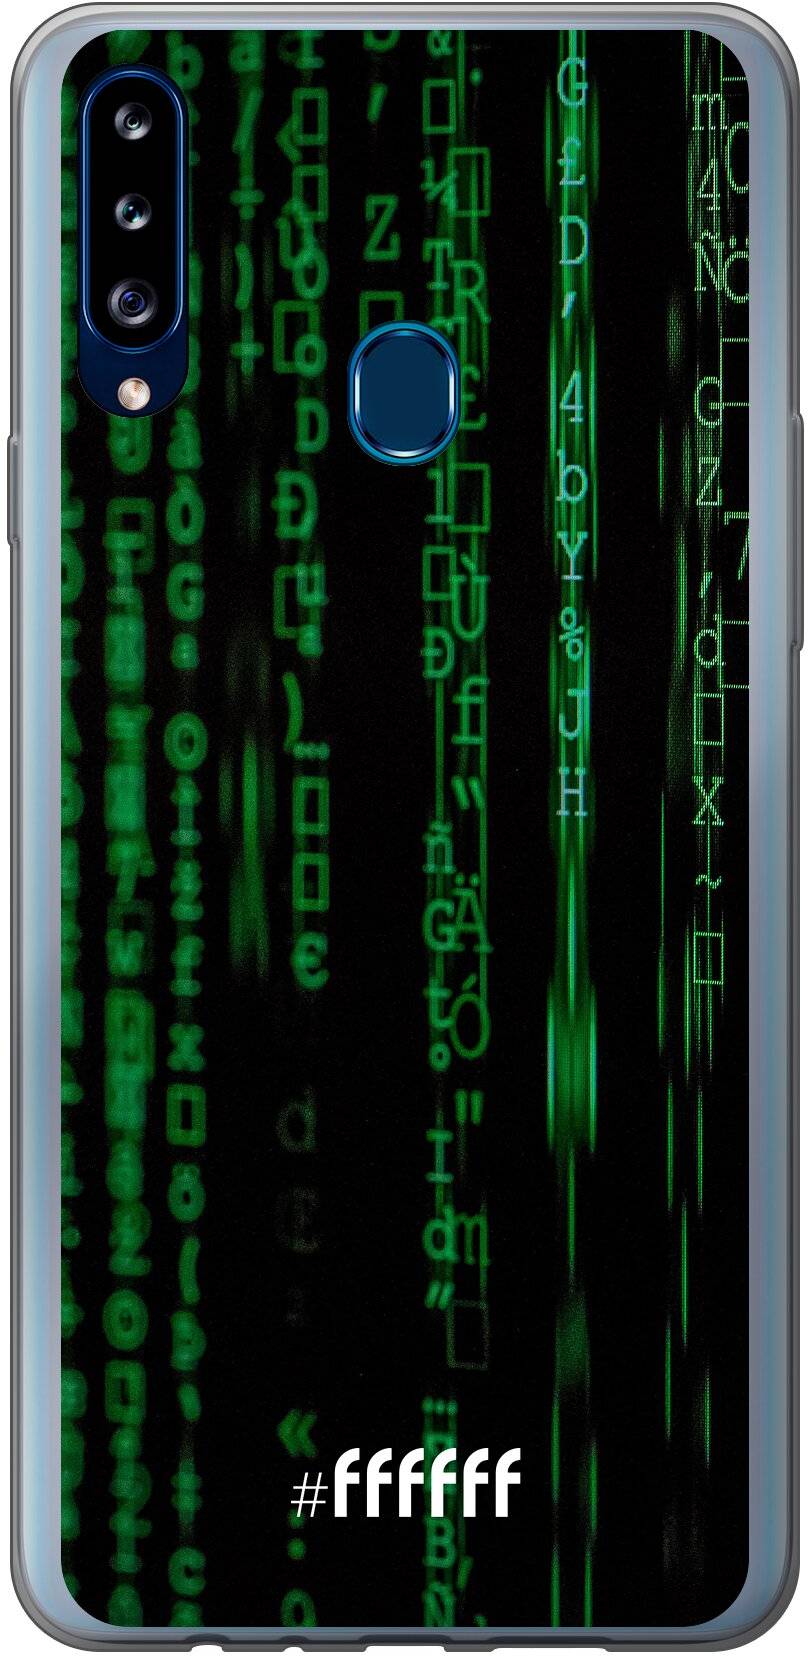 Hacking The Matrix Galaxy A20s